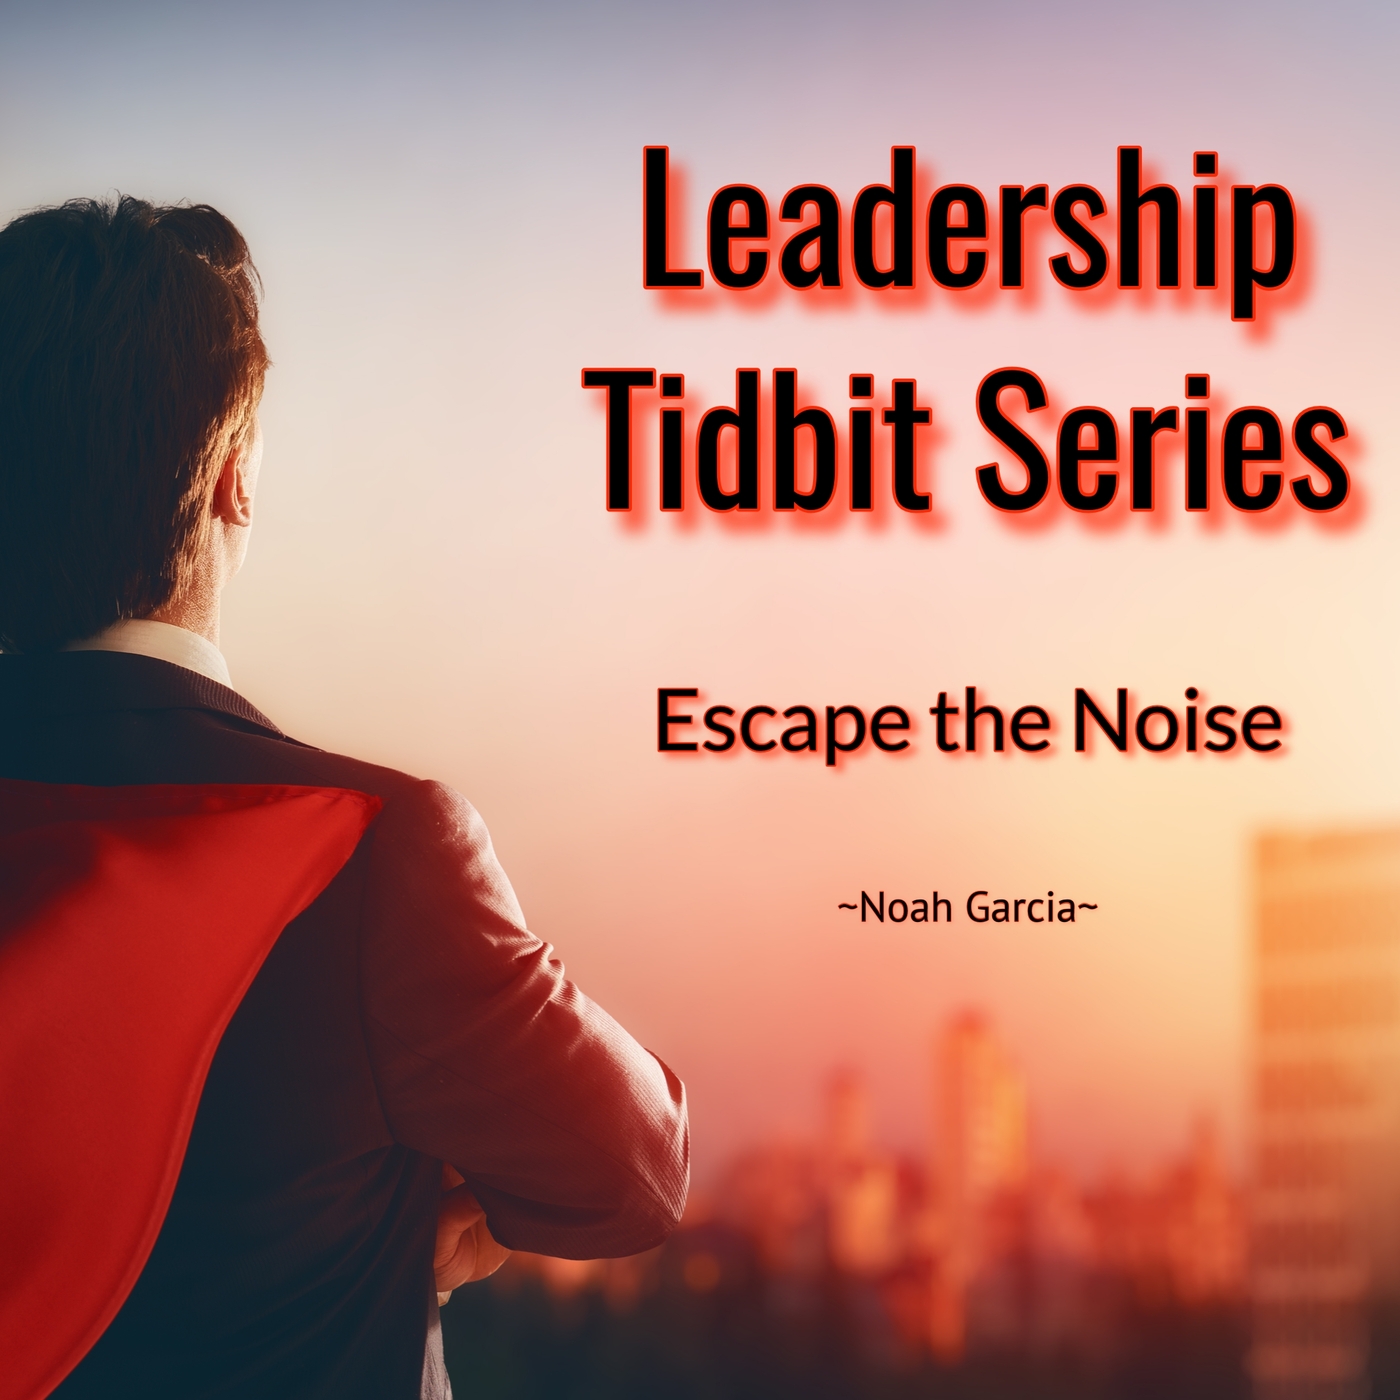 Leadership Tidbit Series: Escape the Noise